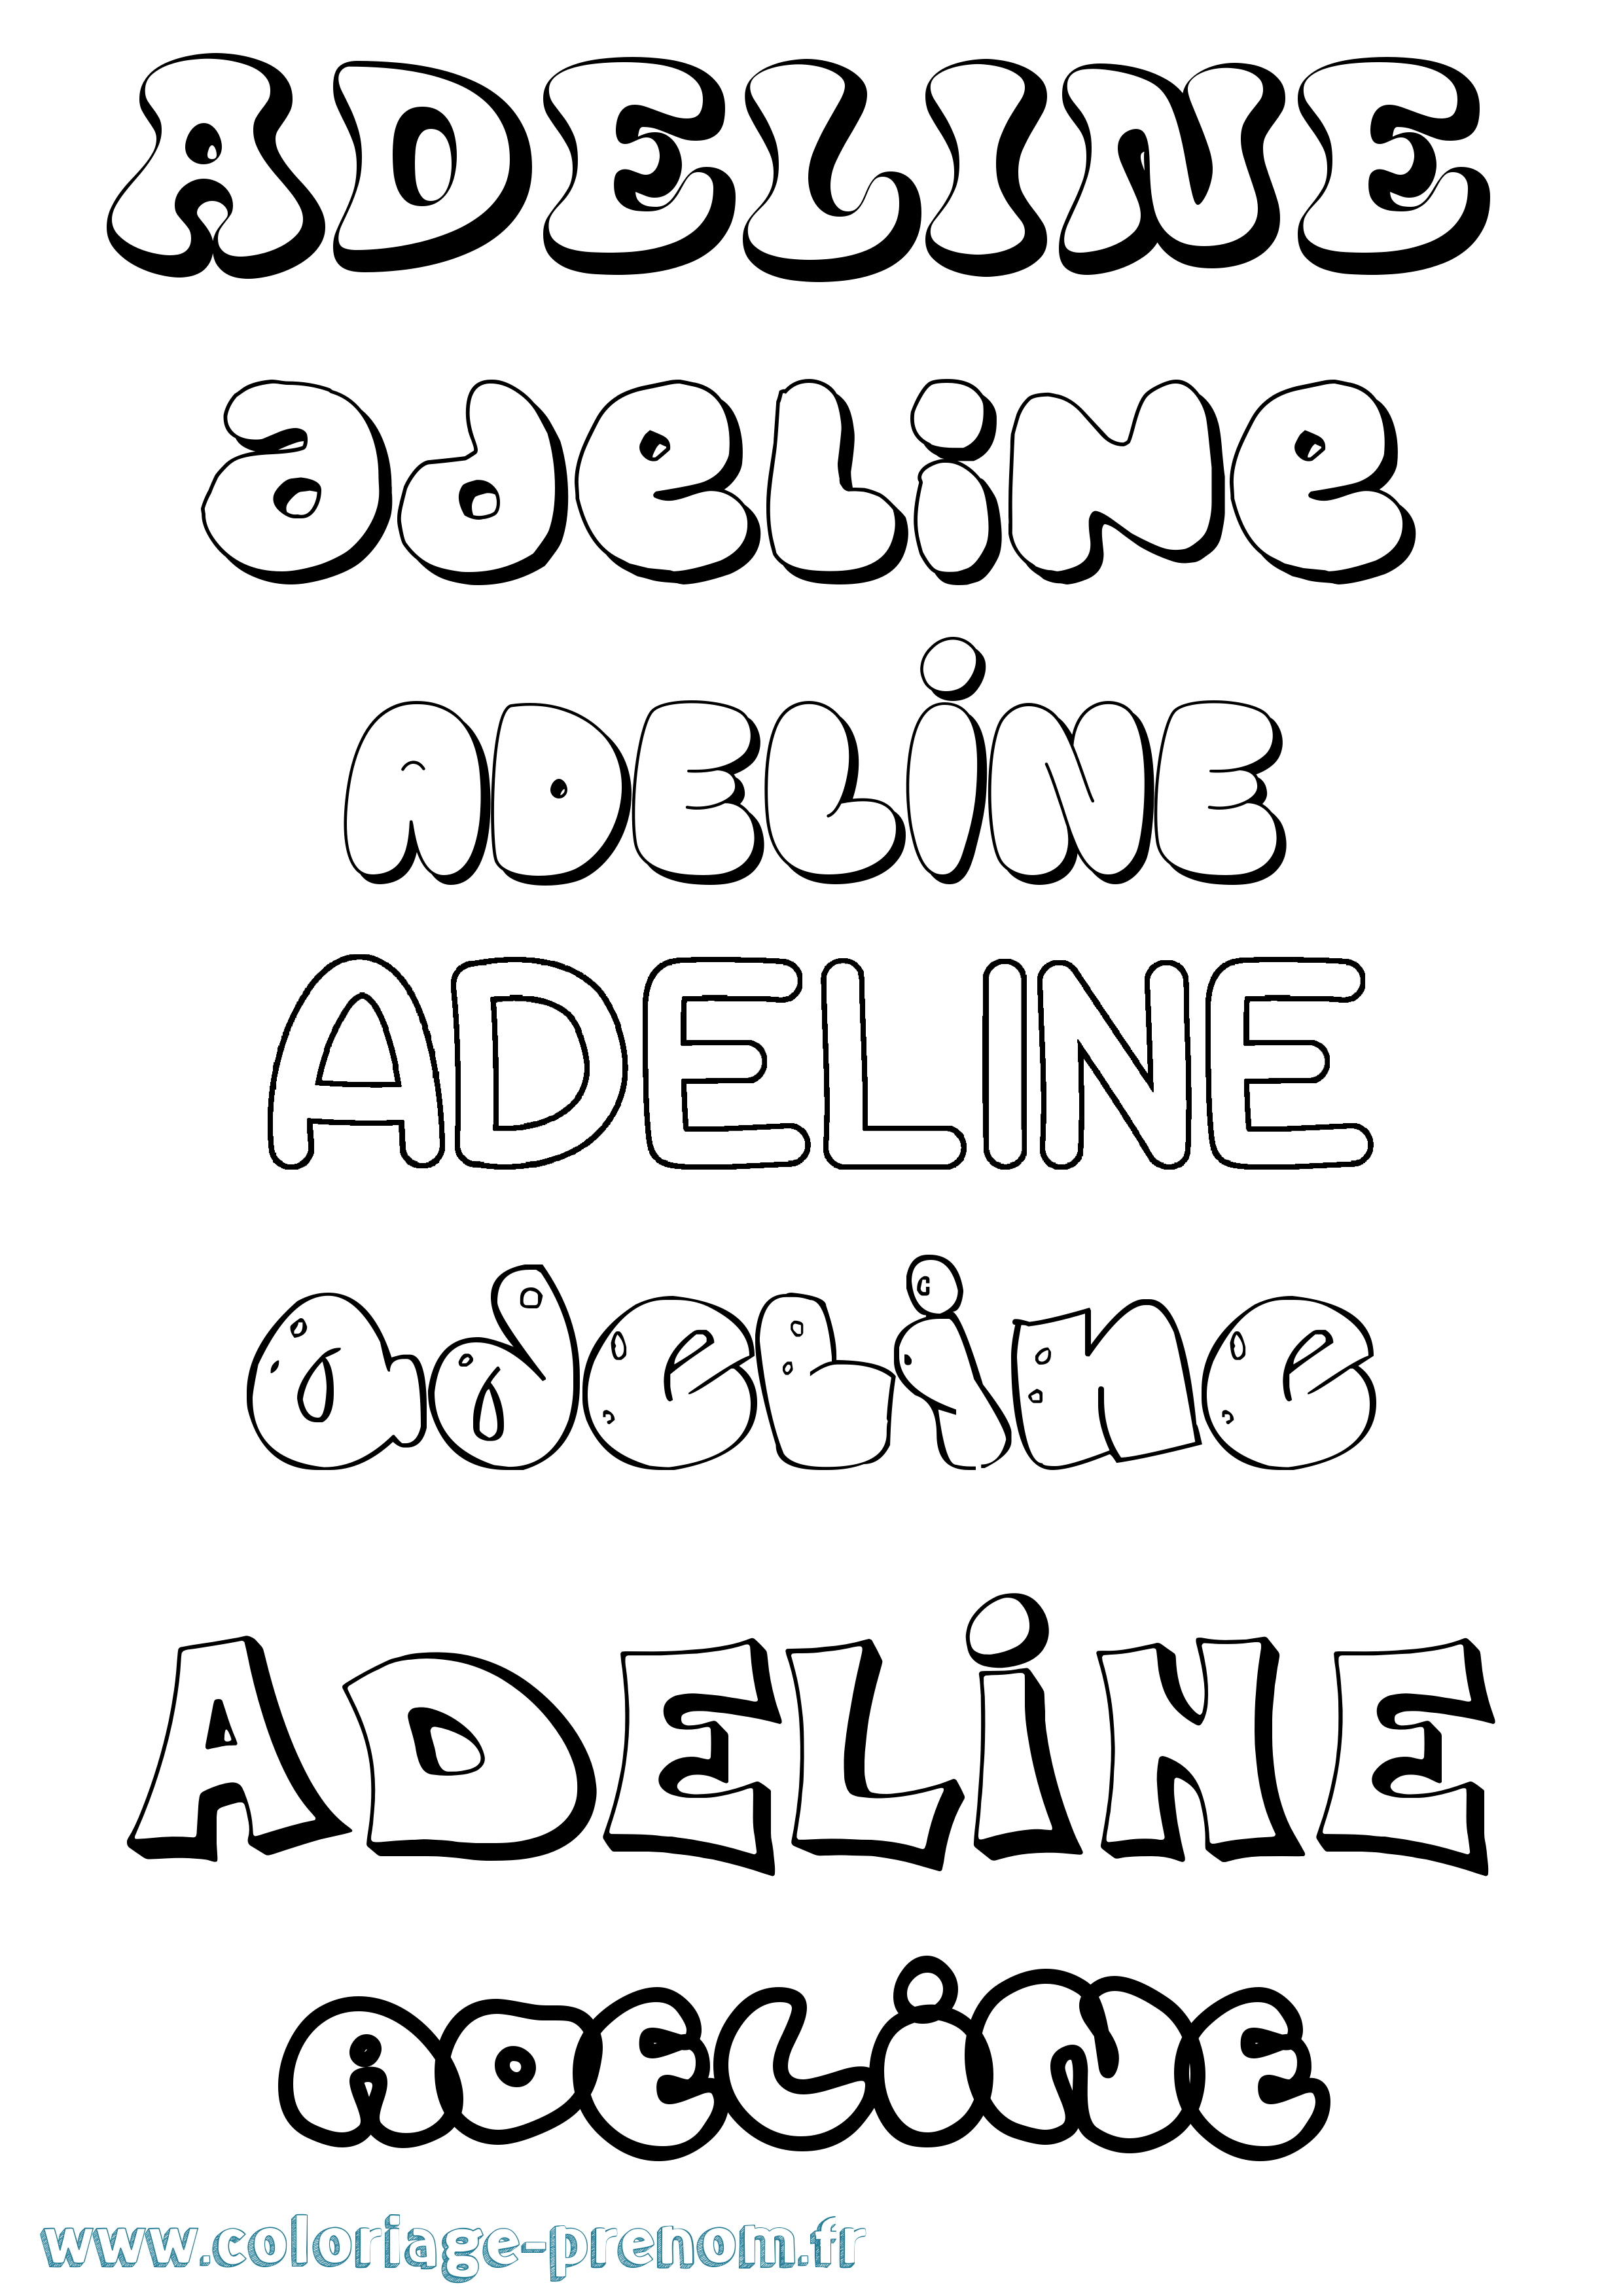 Coloriage prénom Adeline Bubble